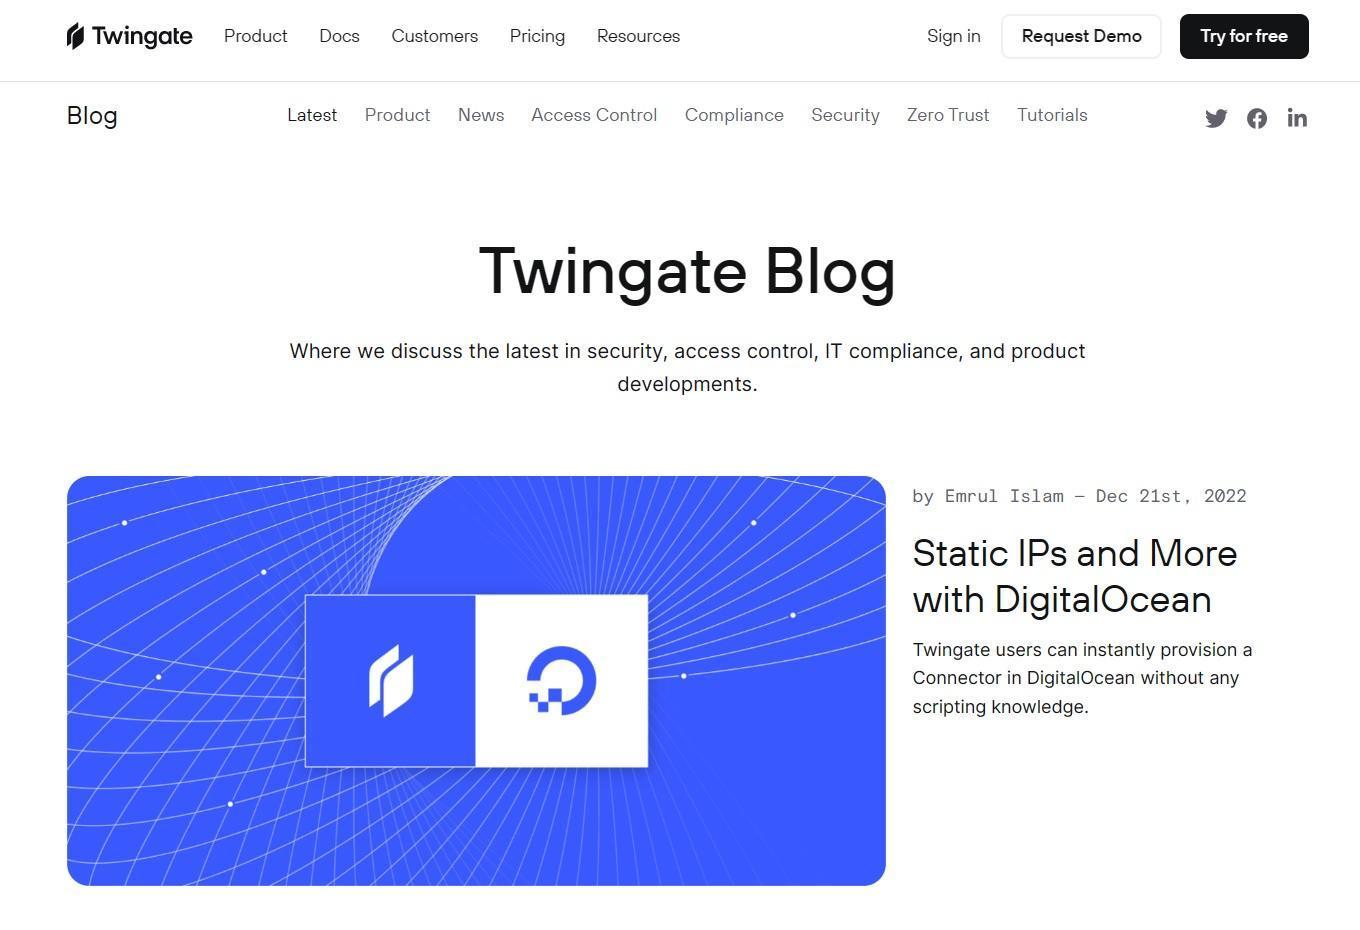 Twingate blog landing page